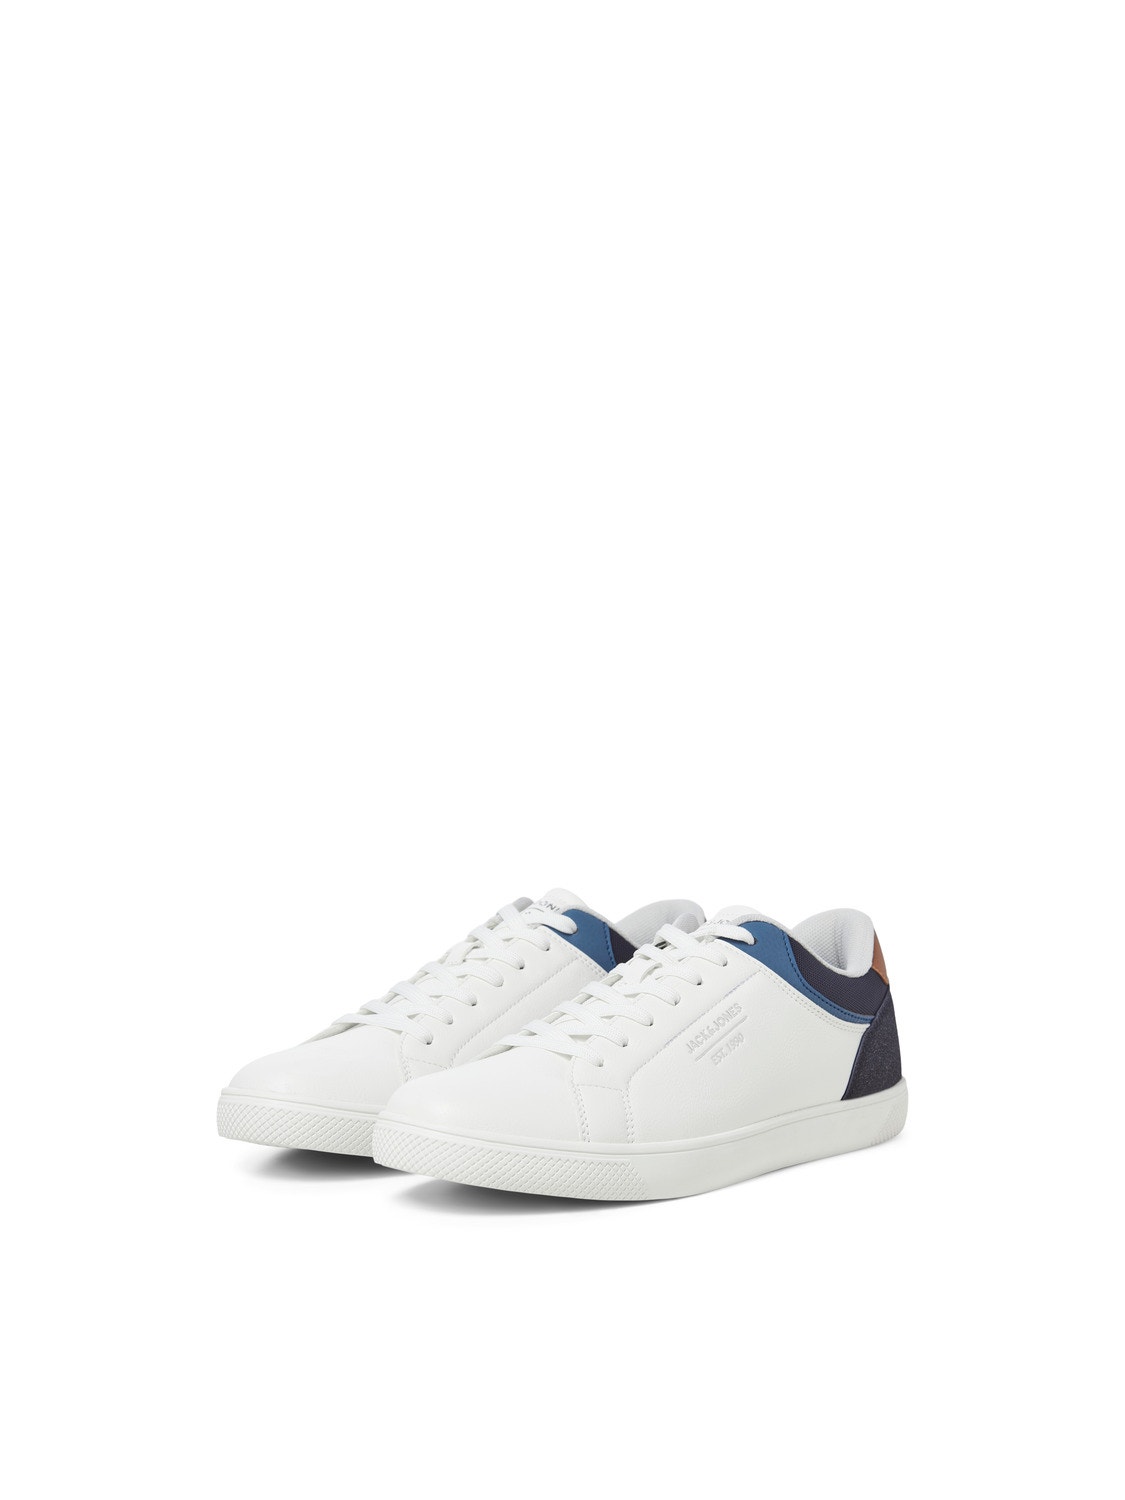 Jack & Jones Sudd Sneaker -Bright White - 12229020